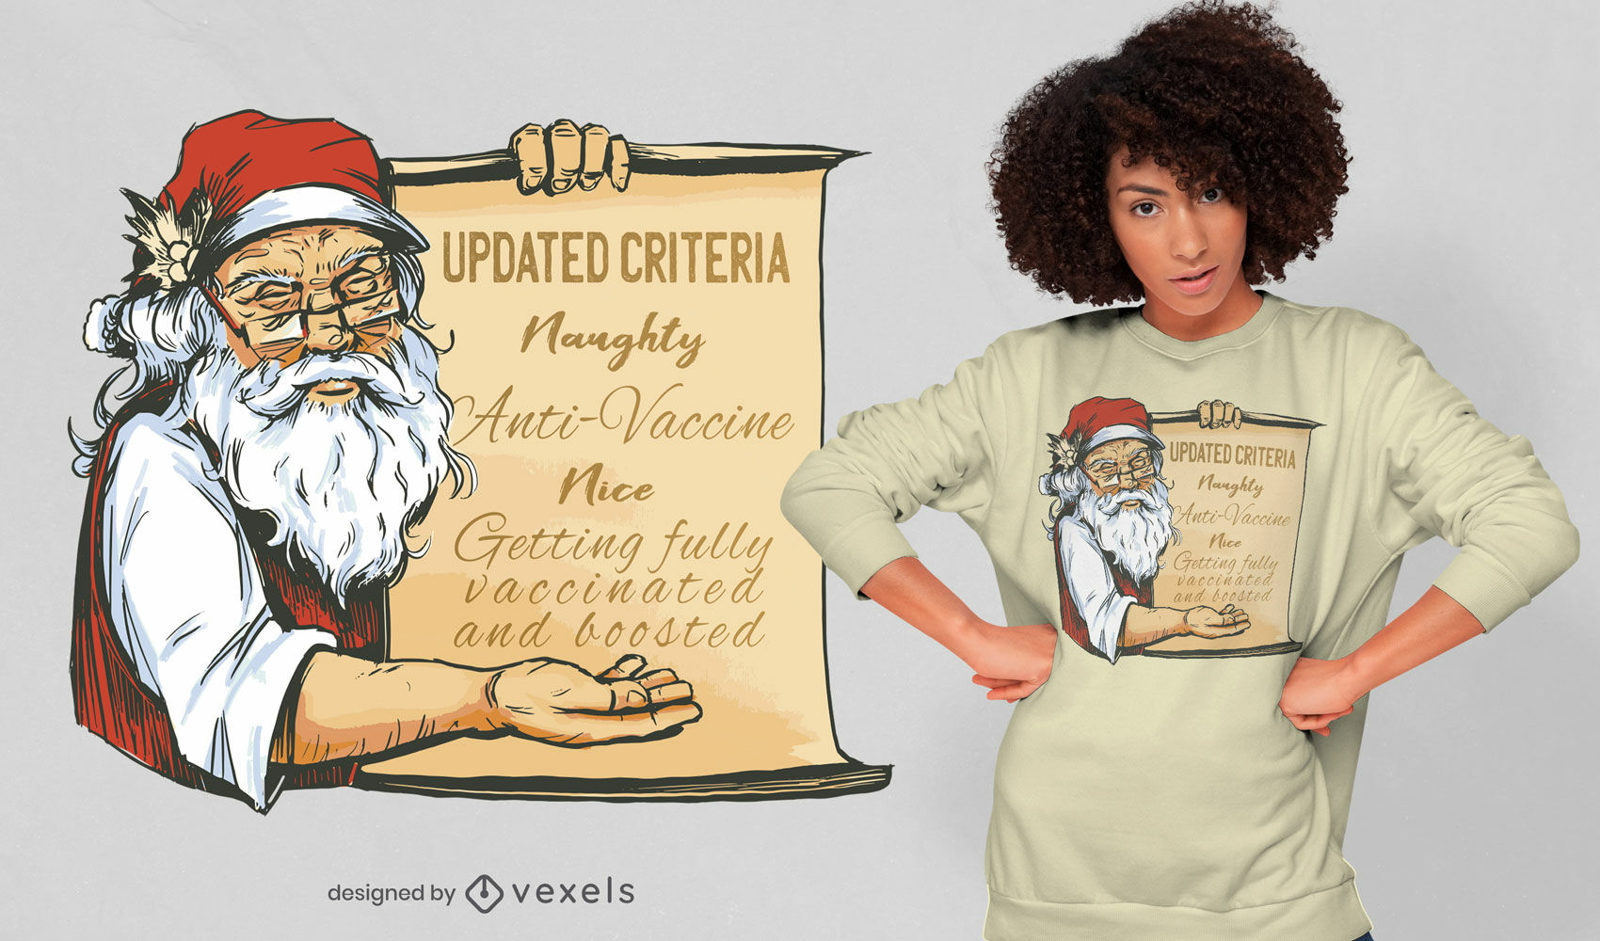 Cool pro-vaccine Santa t-shirt design